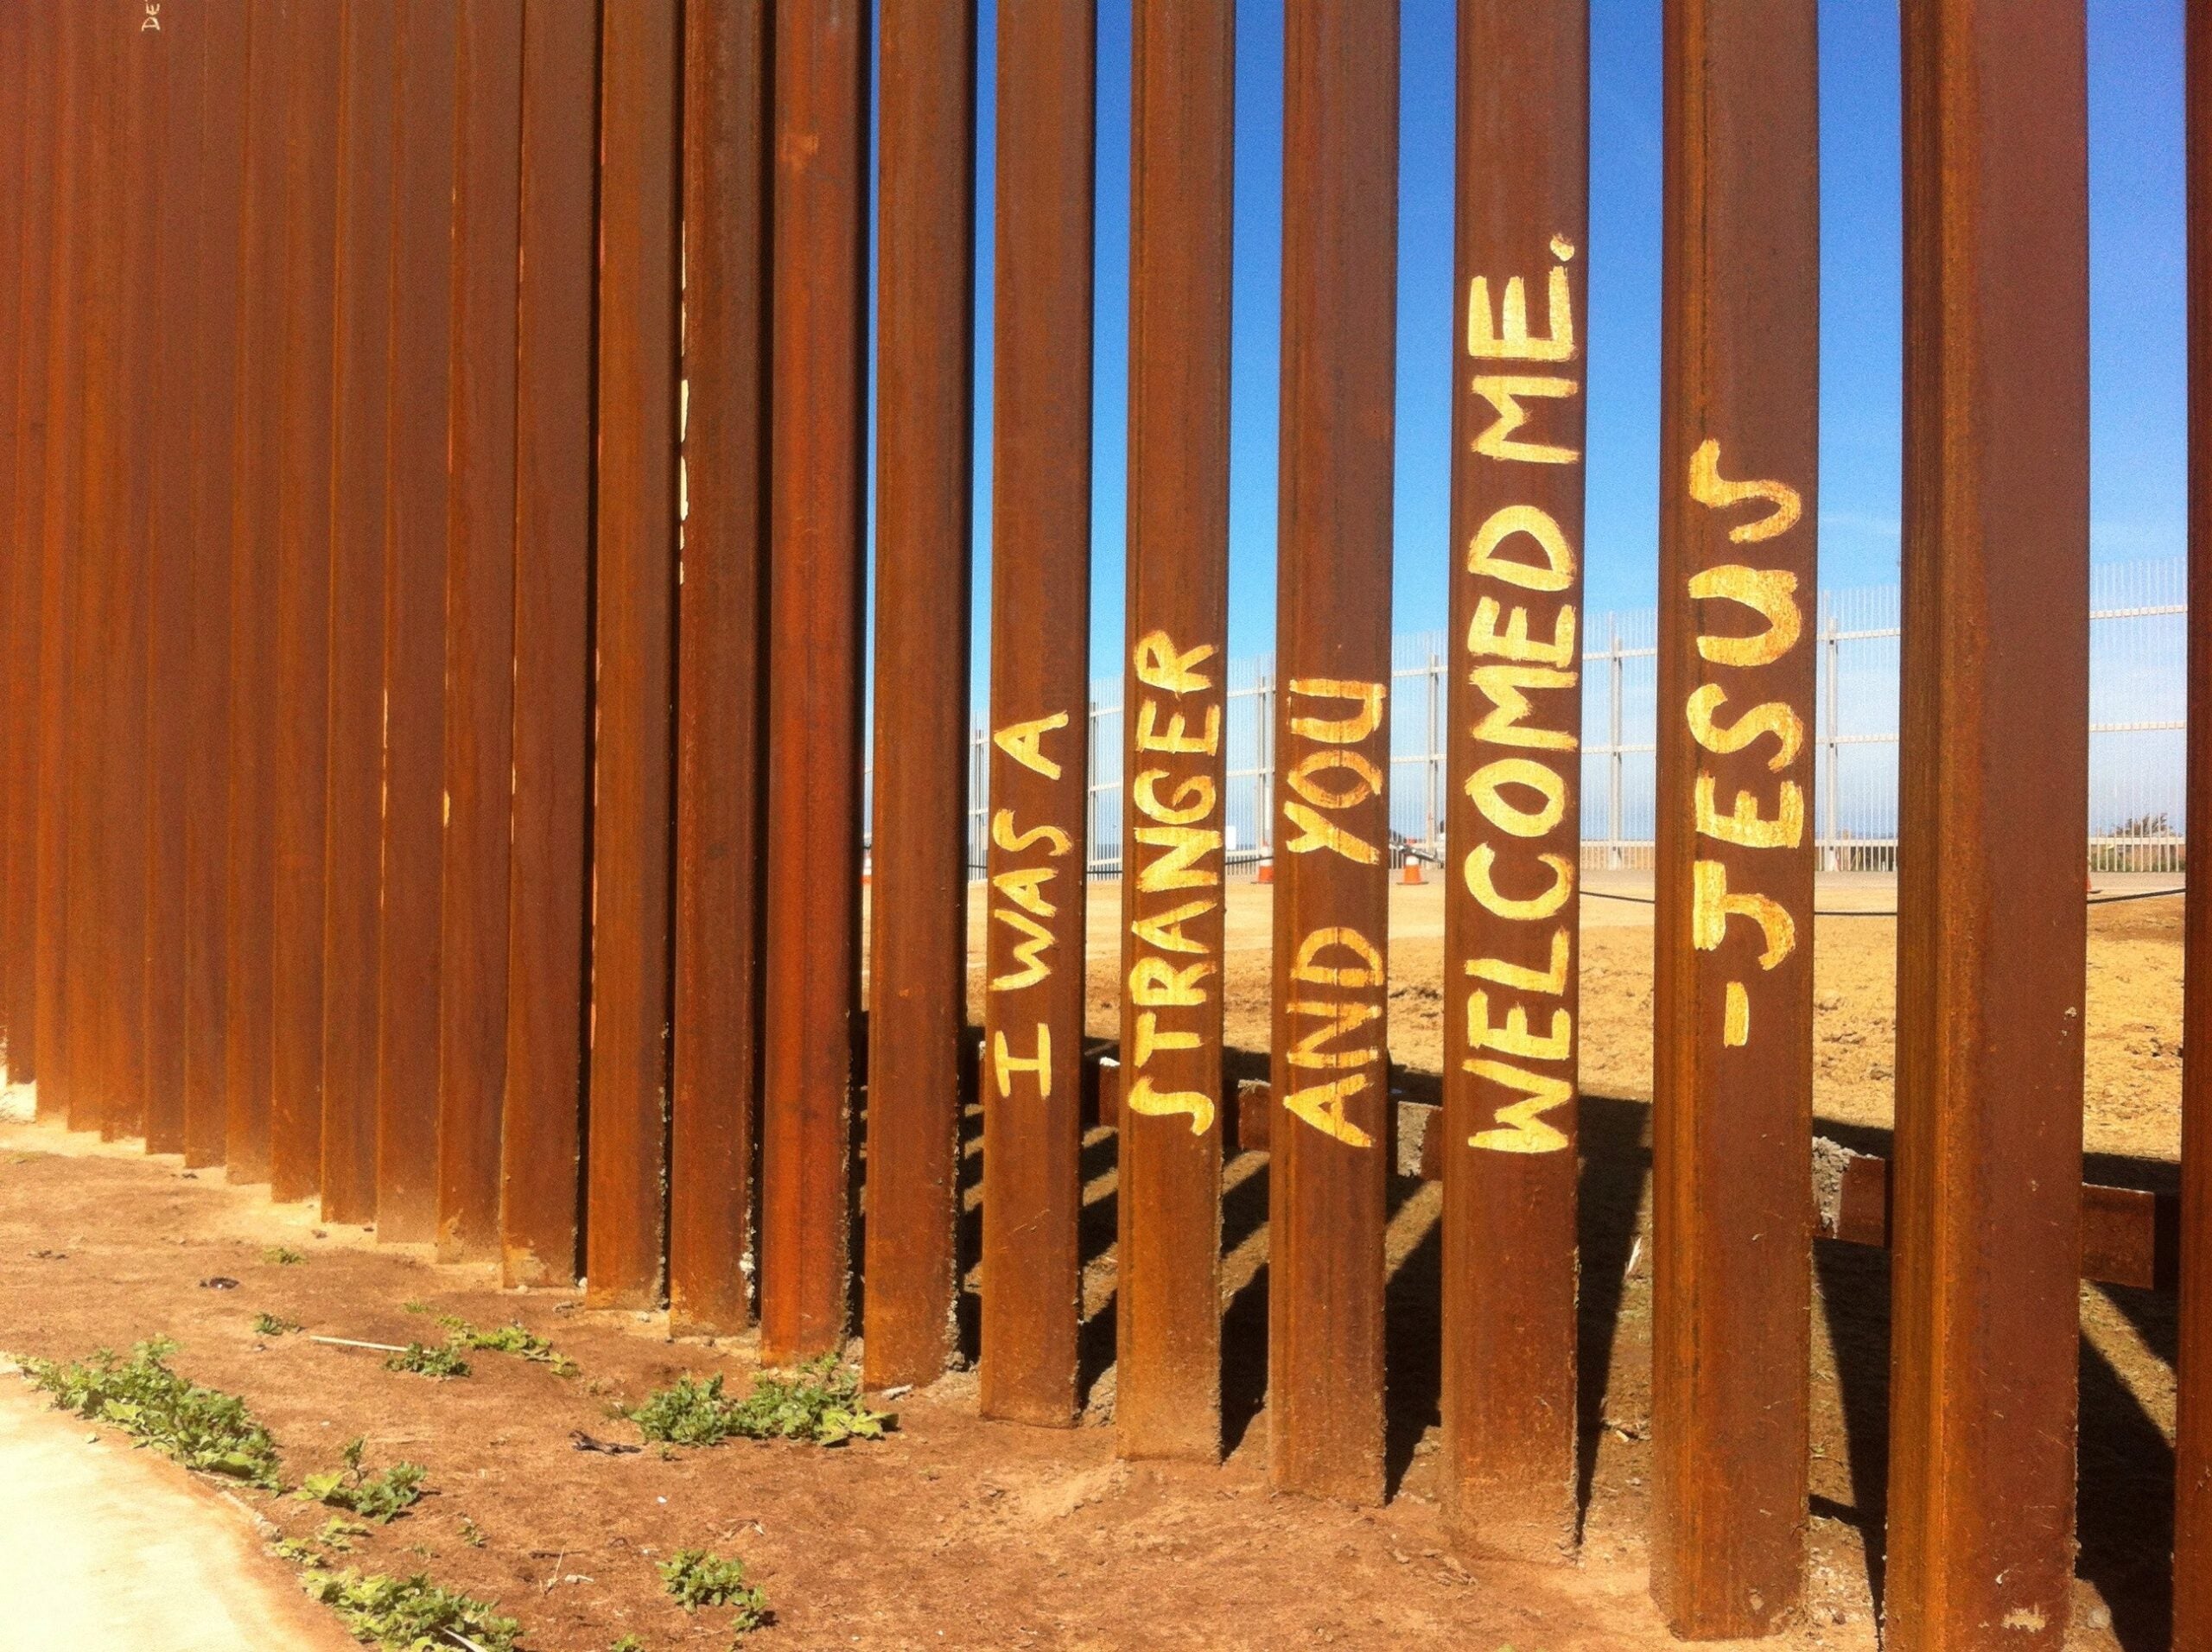 View of the border wall that divides  San Diego, California, from Tijuana, Baja California.
(Adam McLane/Flickr)